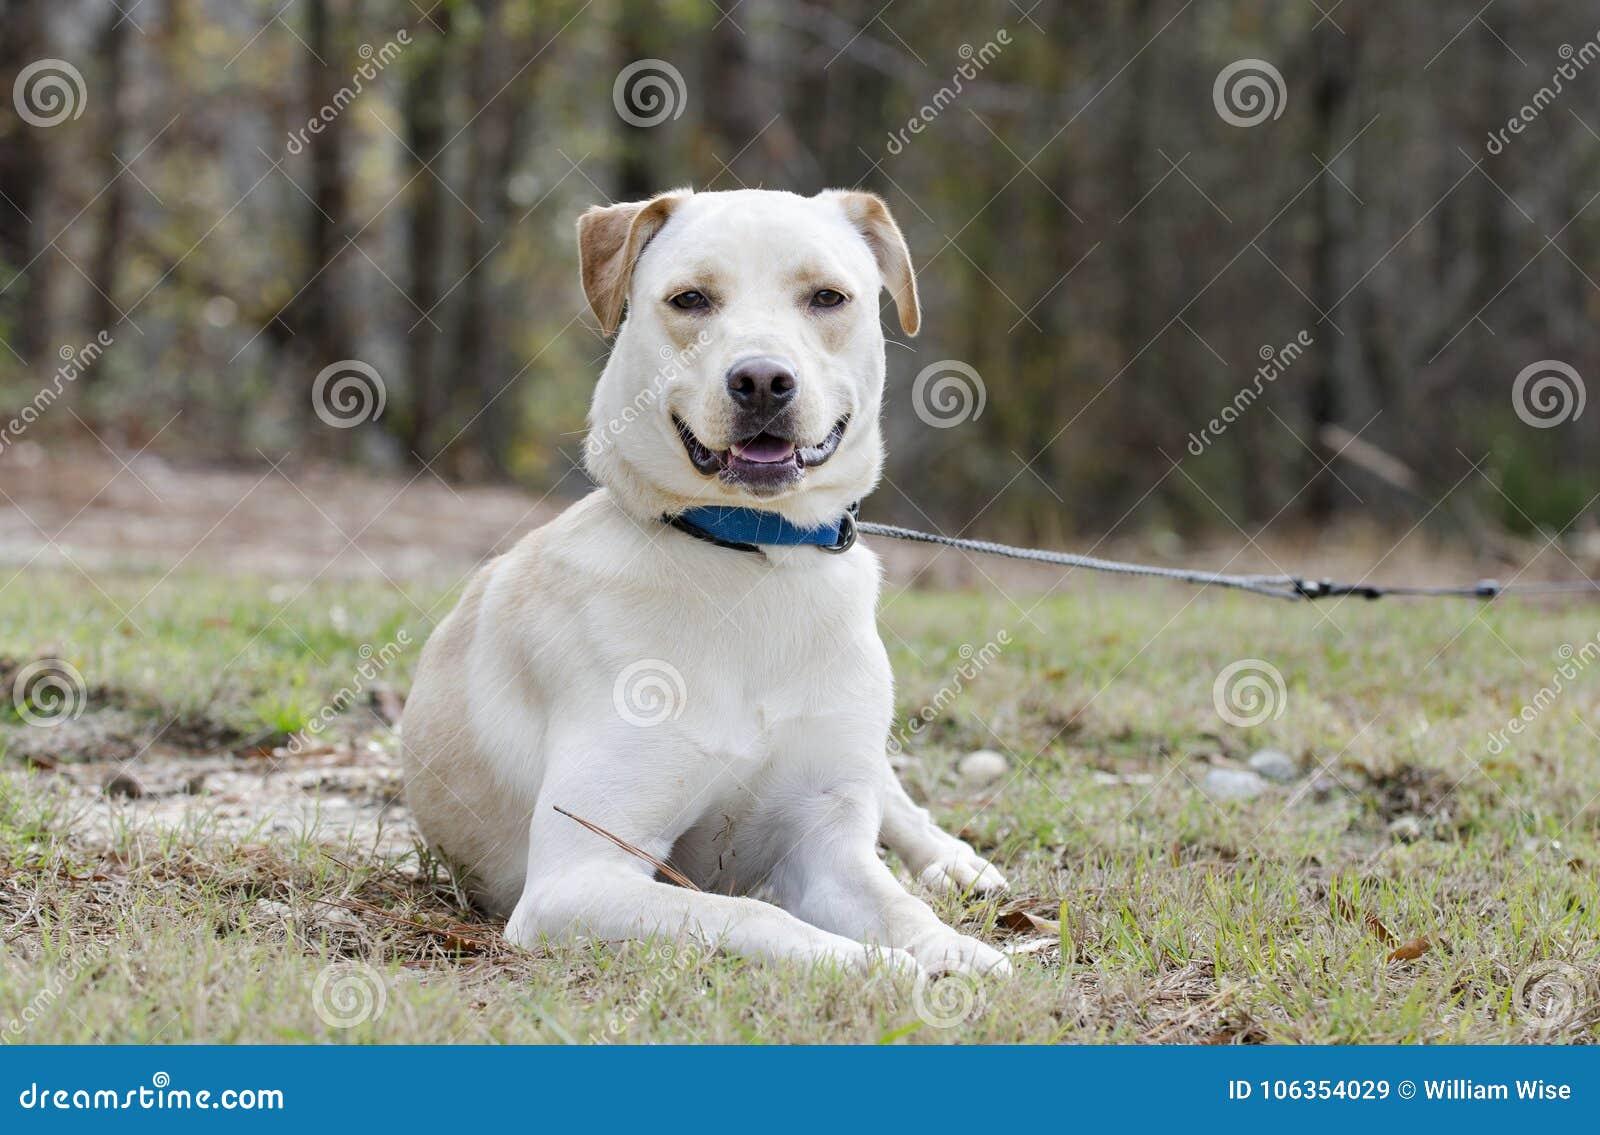 Yellow Lab Chinese Shar Mixed Breed Dog Stock Image - Image of laying, companion: 106354029